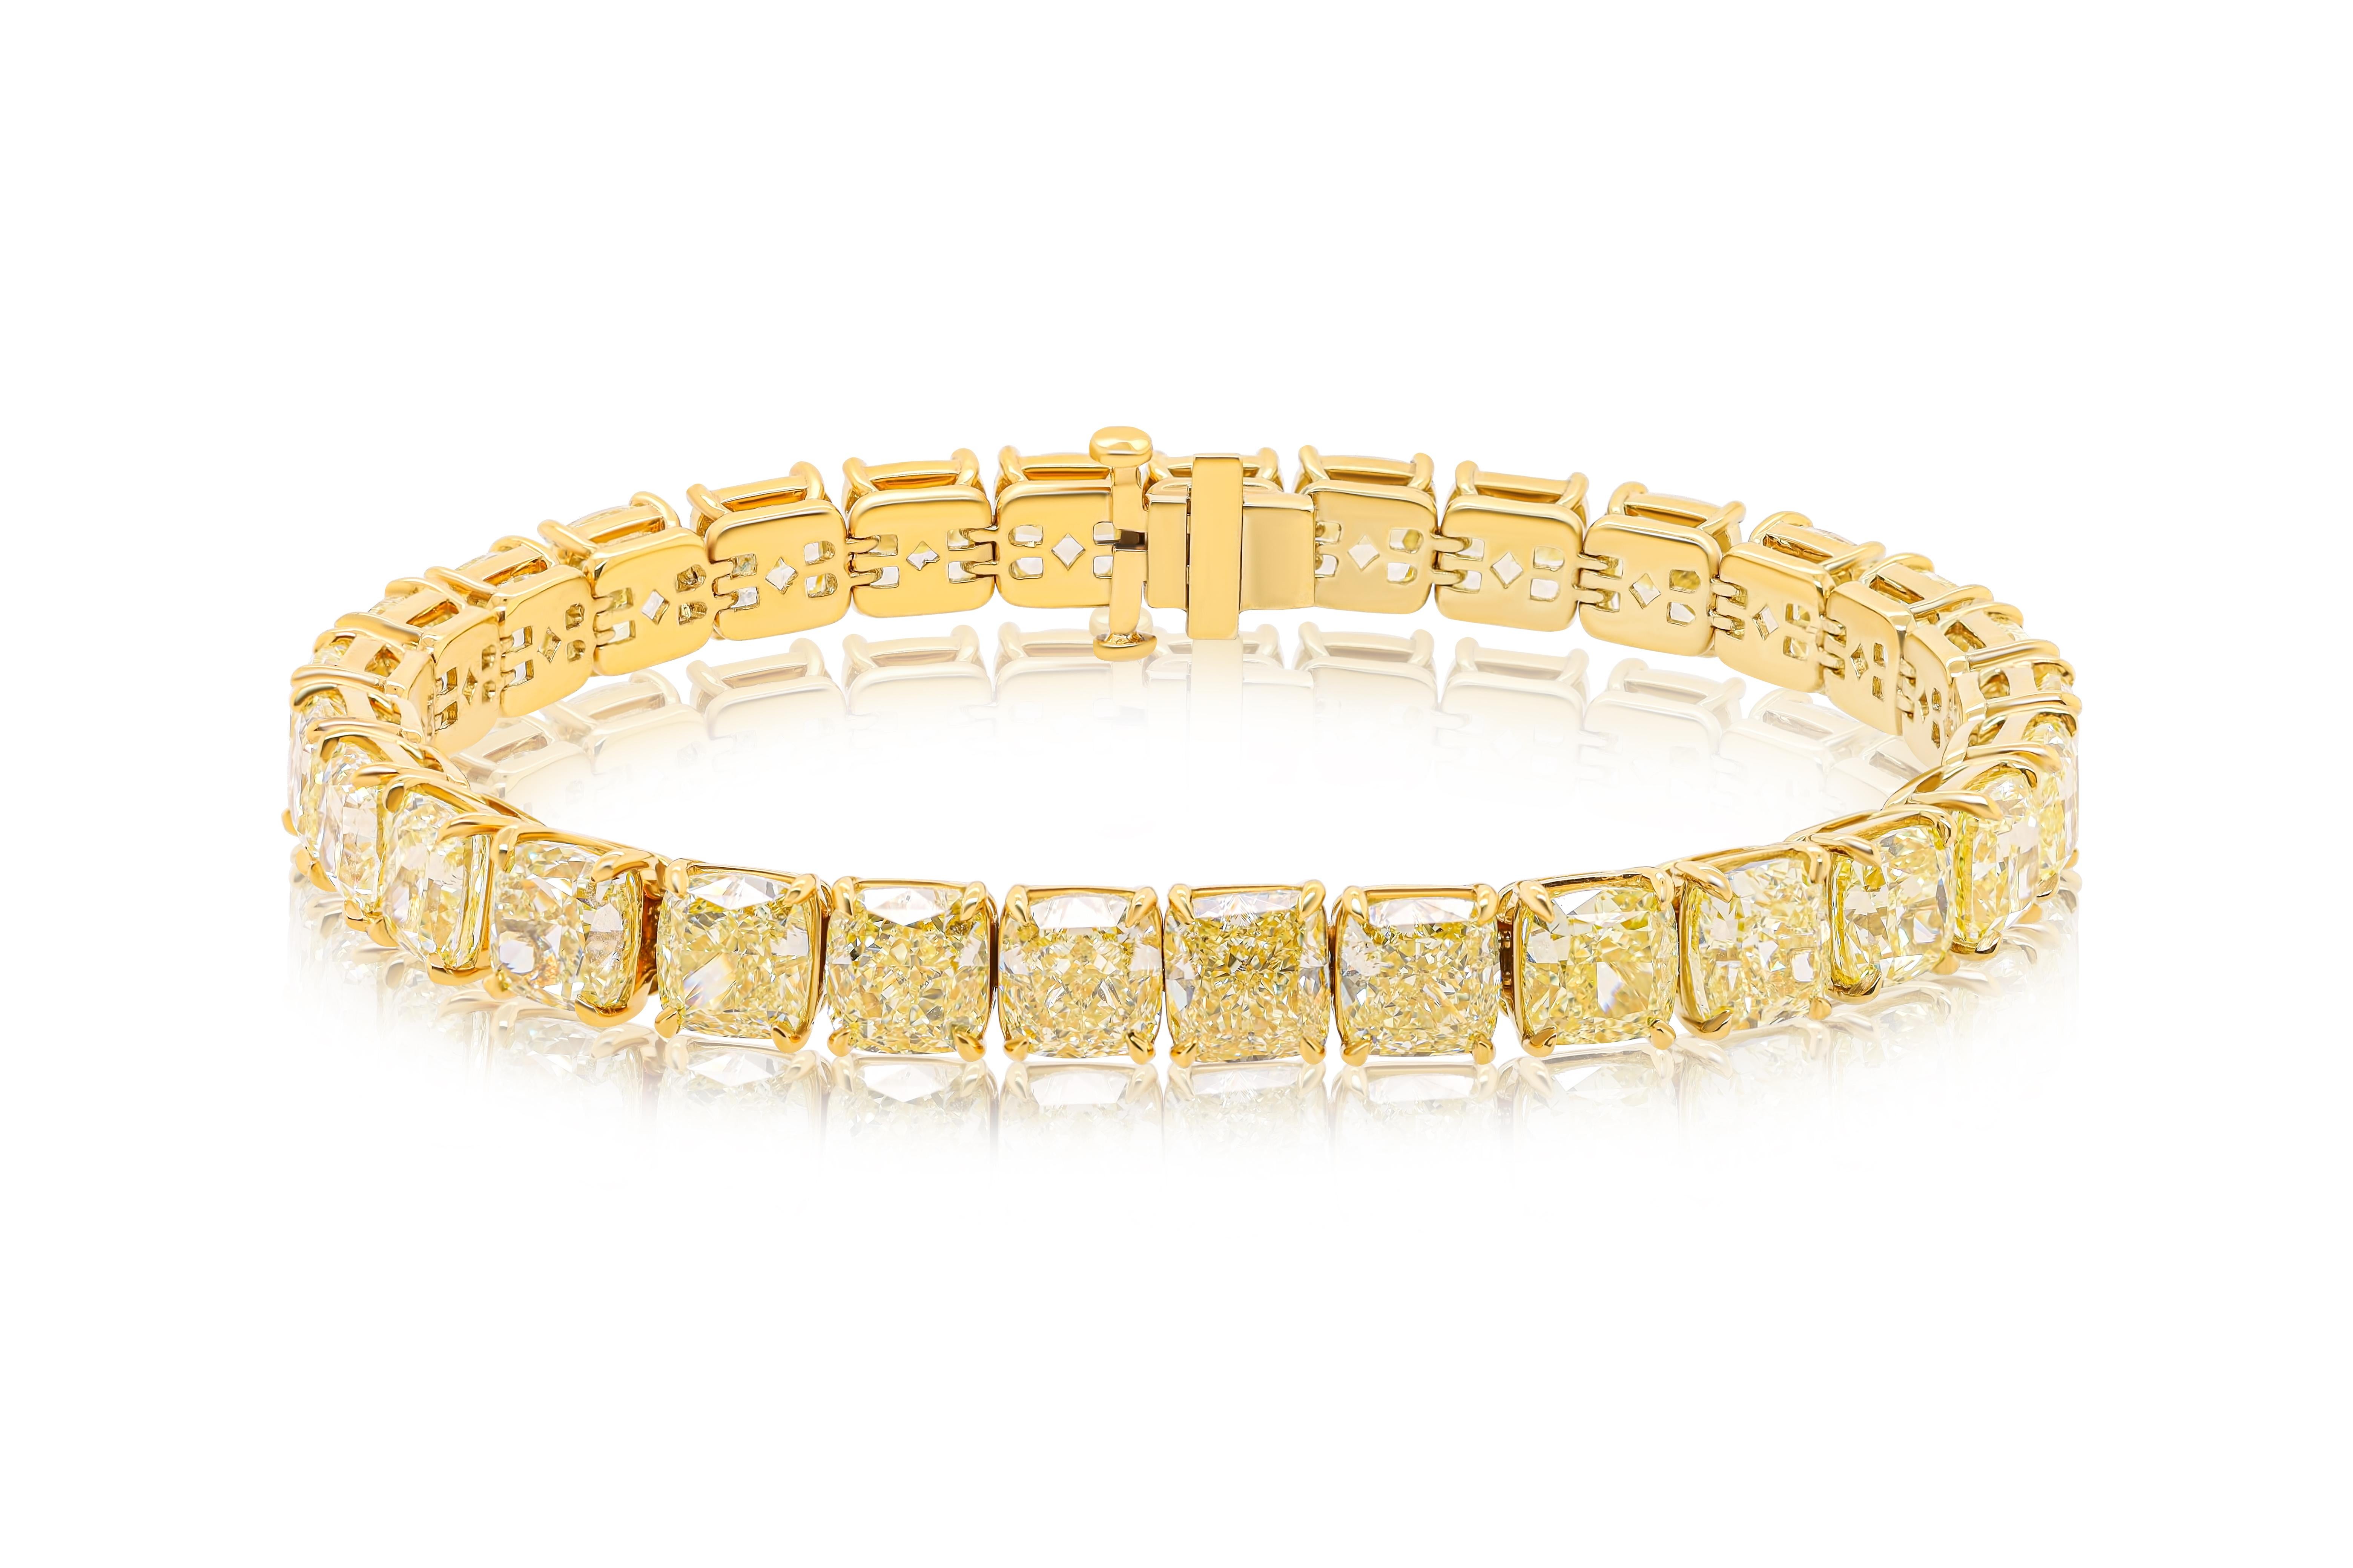 18 kt custom yellow gold 4 prong diamond eternity bracelet  35.07 cts GIA certified cushion cut diamonds 1-1.25 carat each Fancy Yellow VVS-VS 29 stones.Excellent cut.

